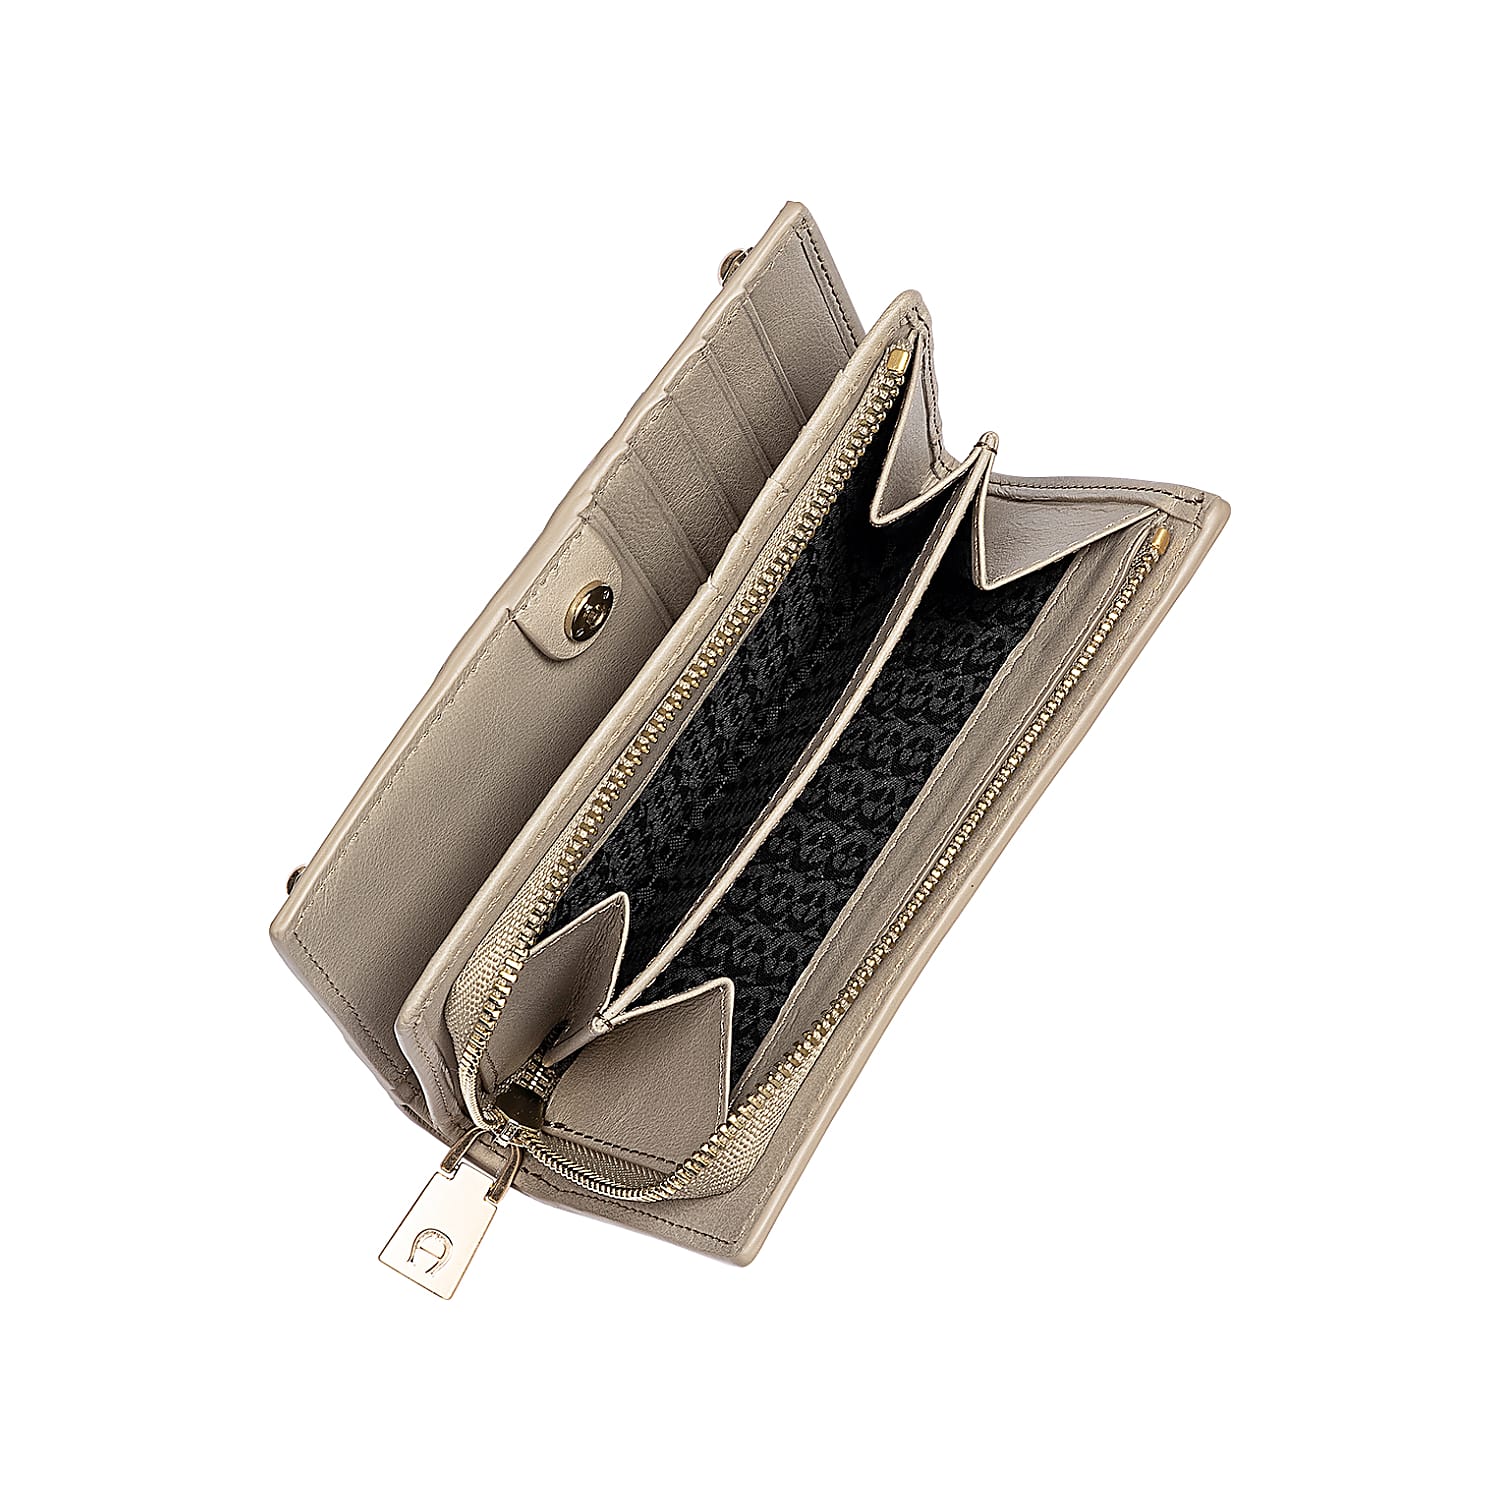 Diadora combination wallet.